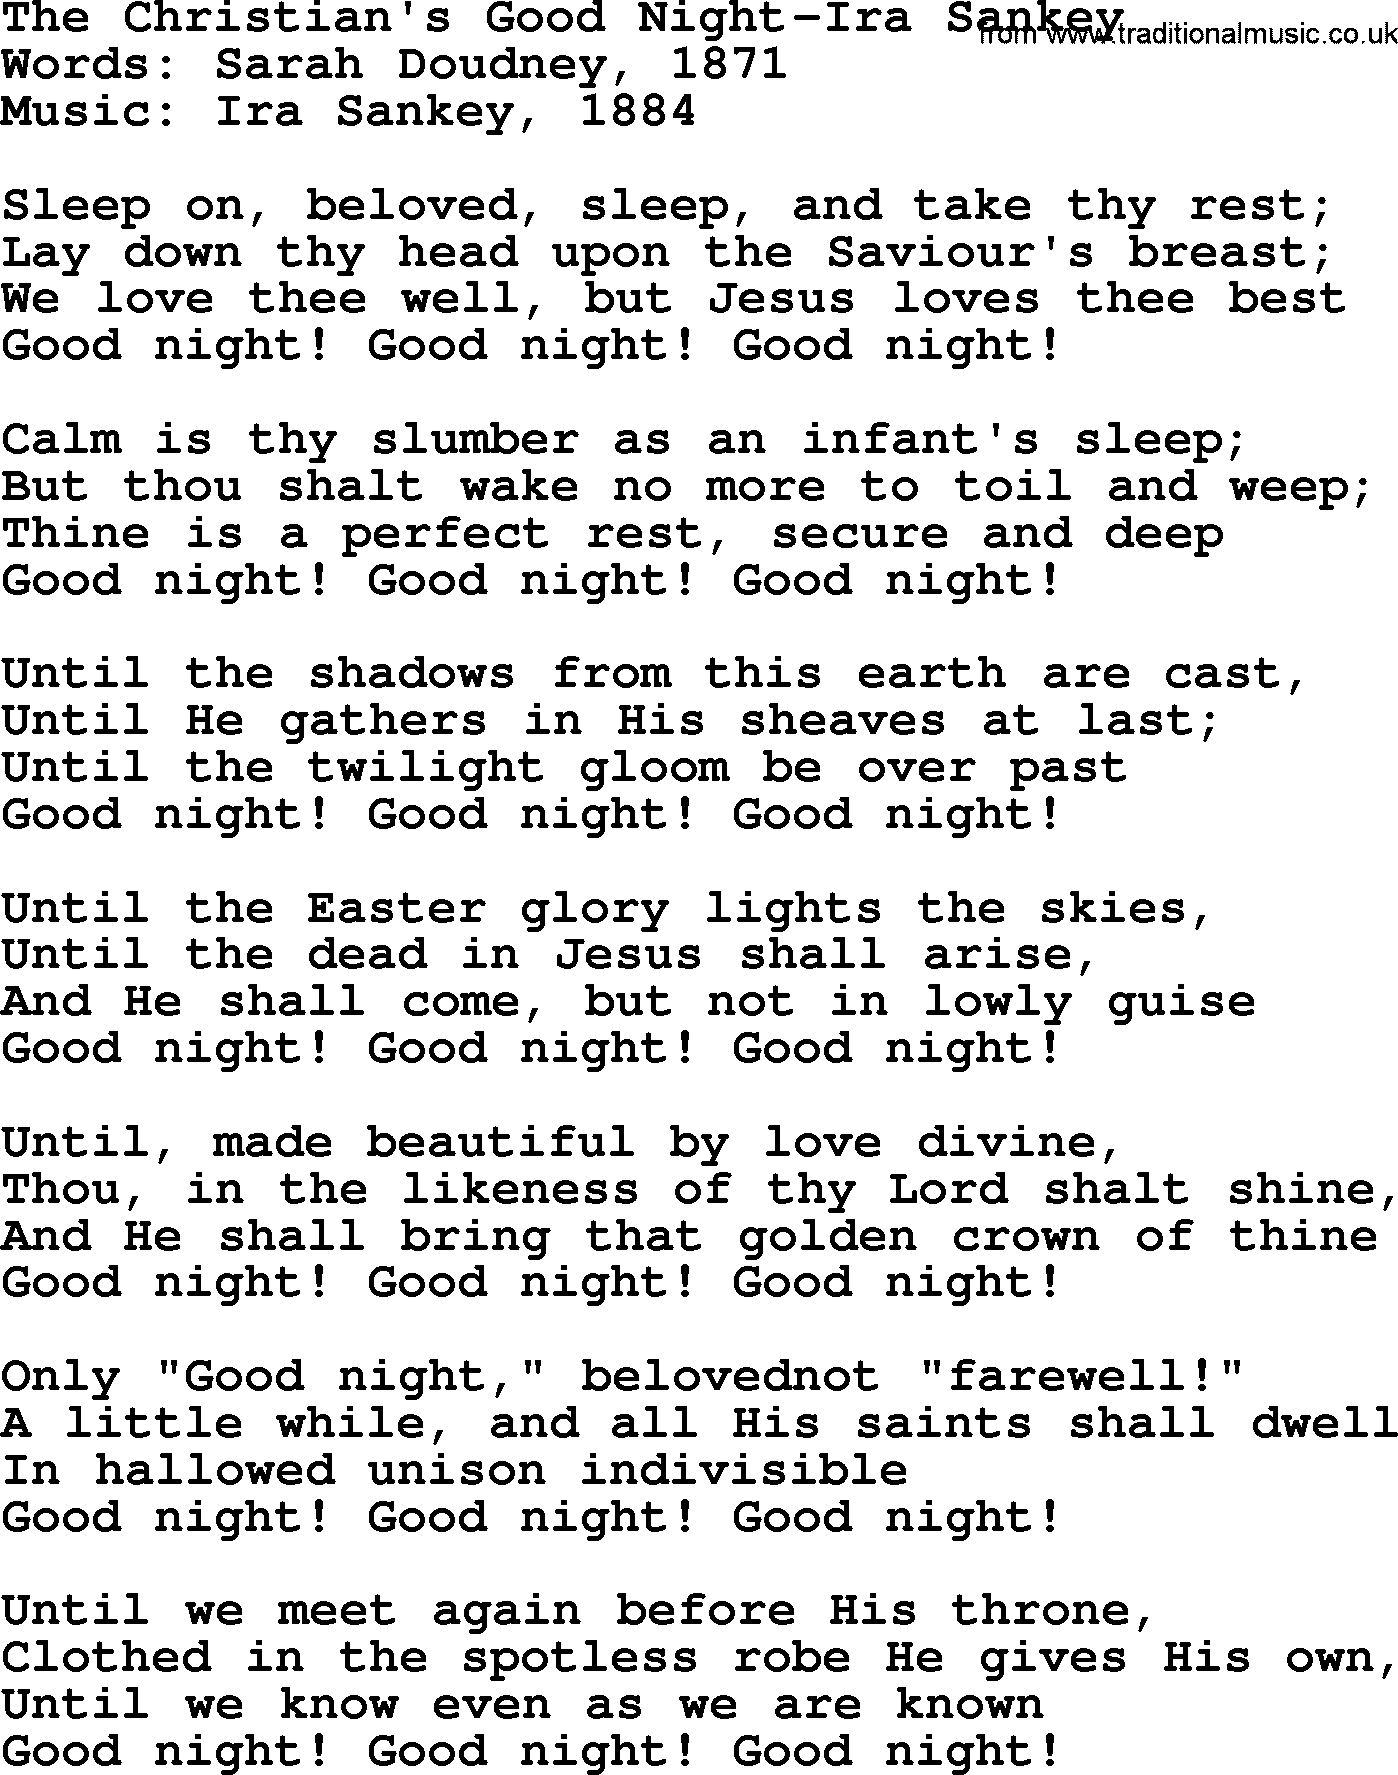 Ira Sankey hymn: The Christian's Good Night-Ira Sankey, lyrics